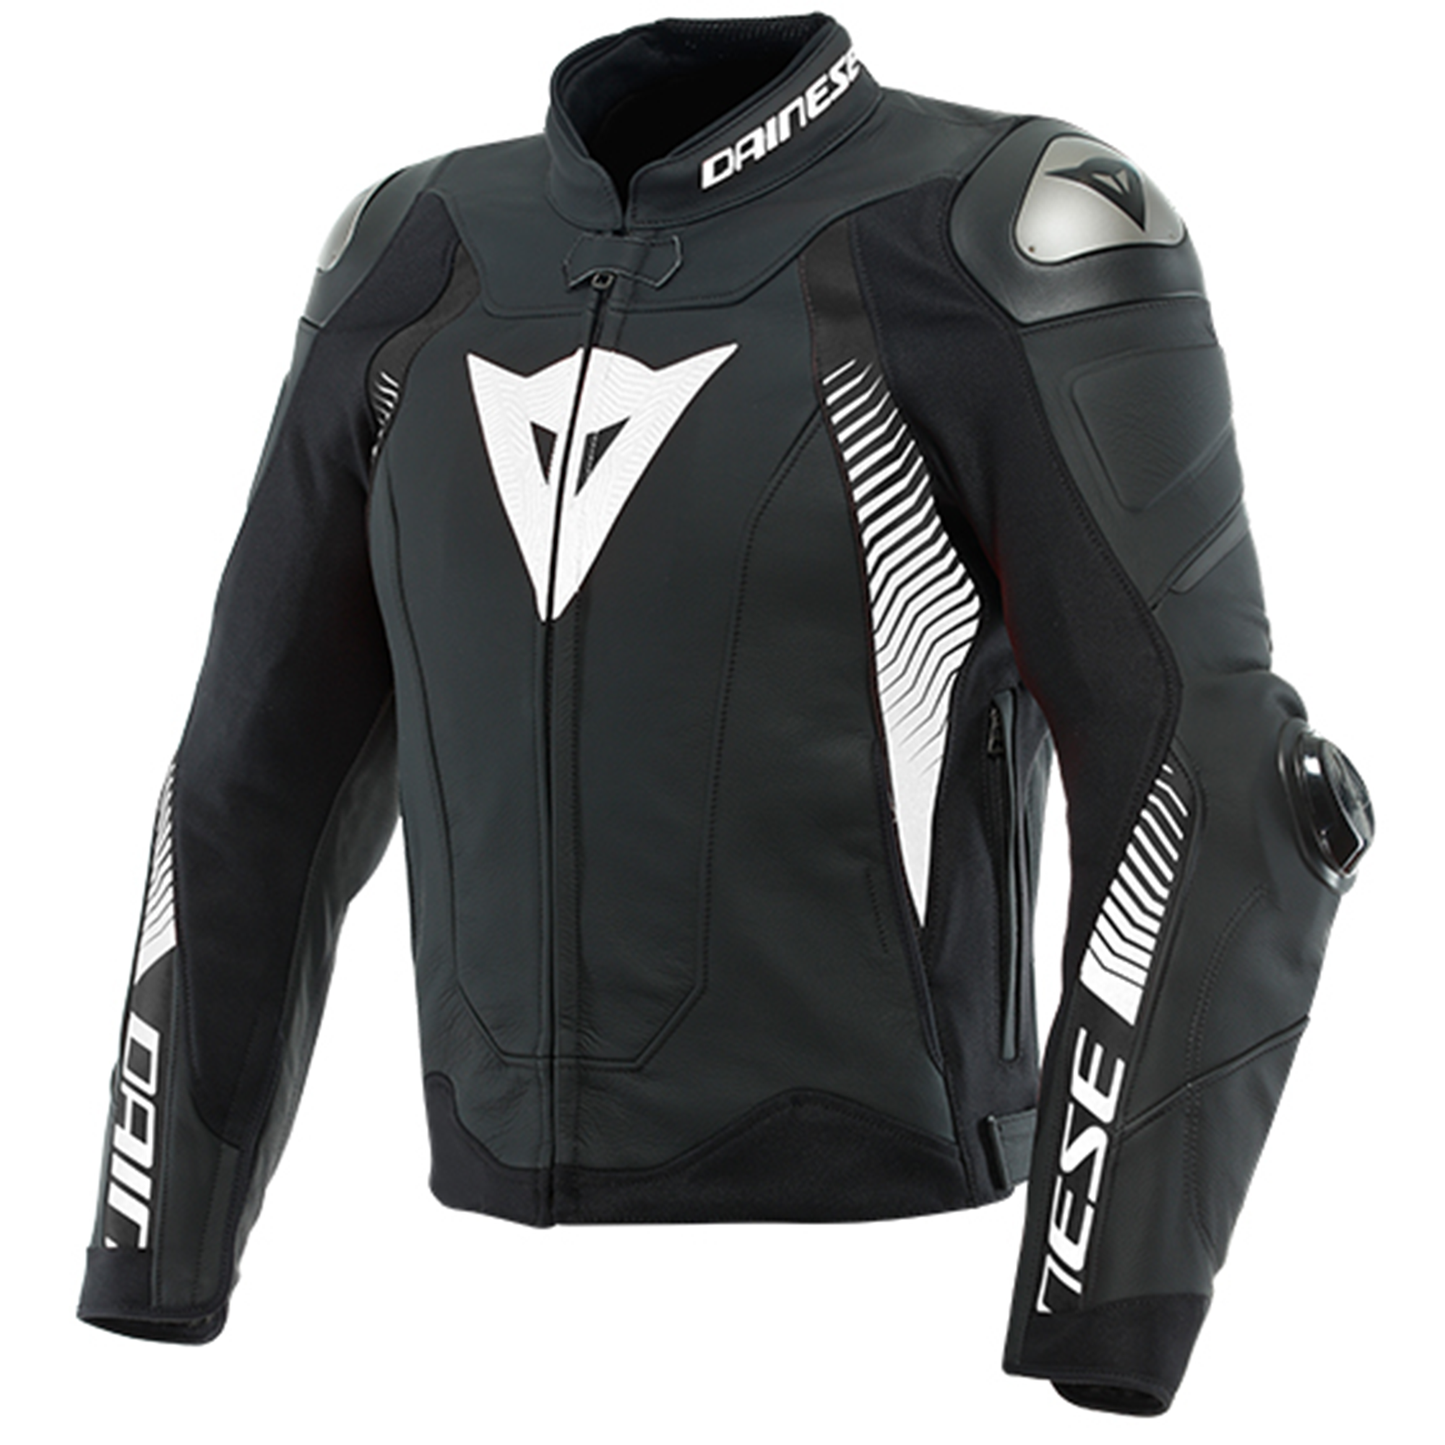 Dainese Super Speed 4 Leather Jacket - Matt Black/White (78A)